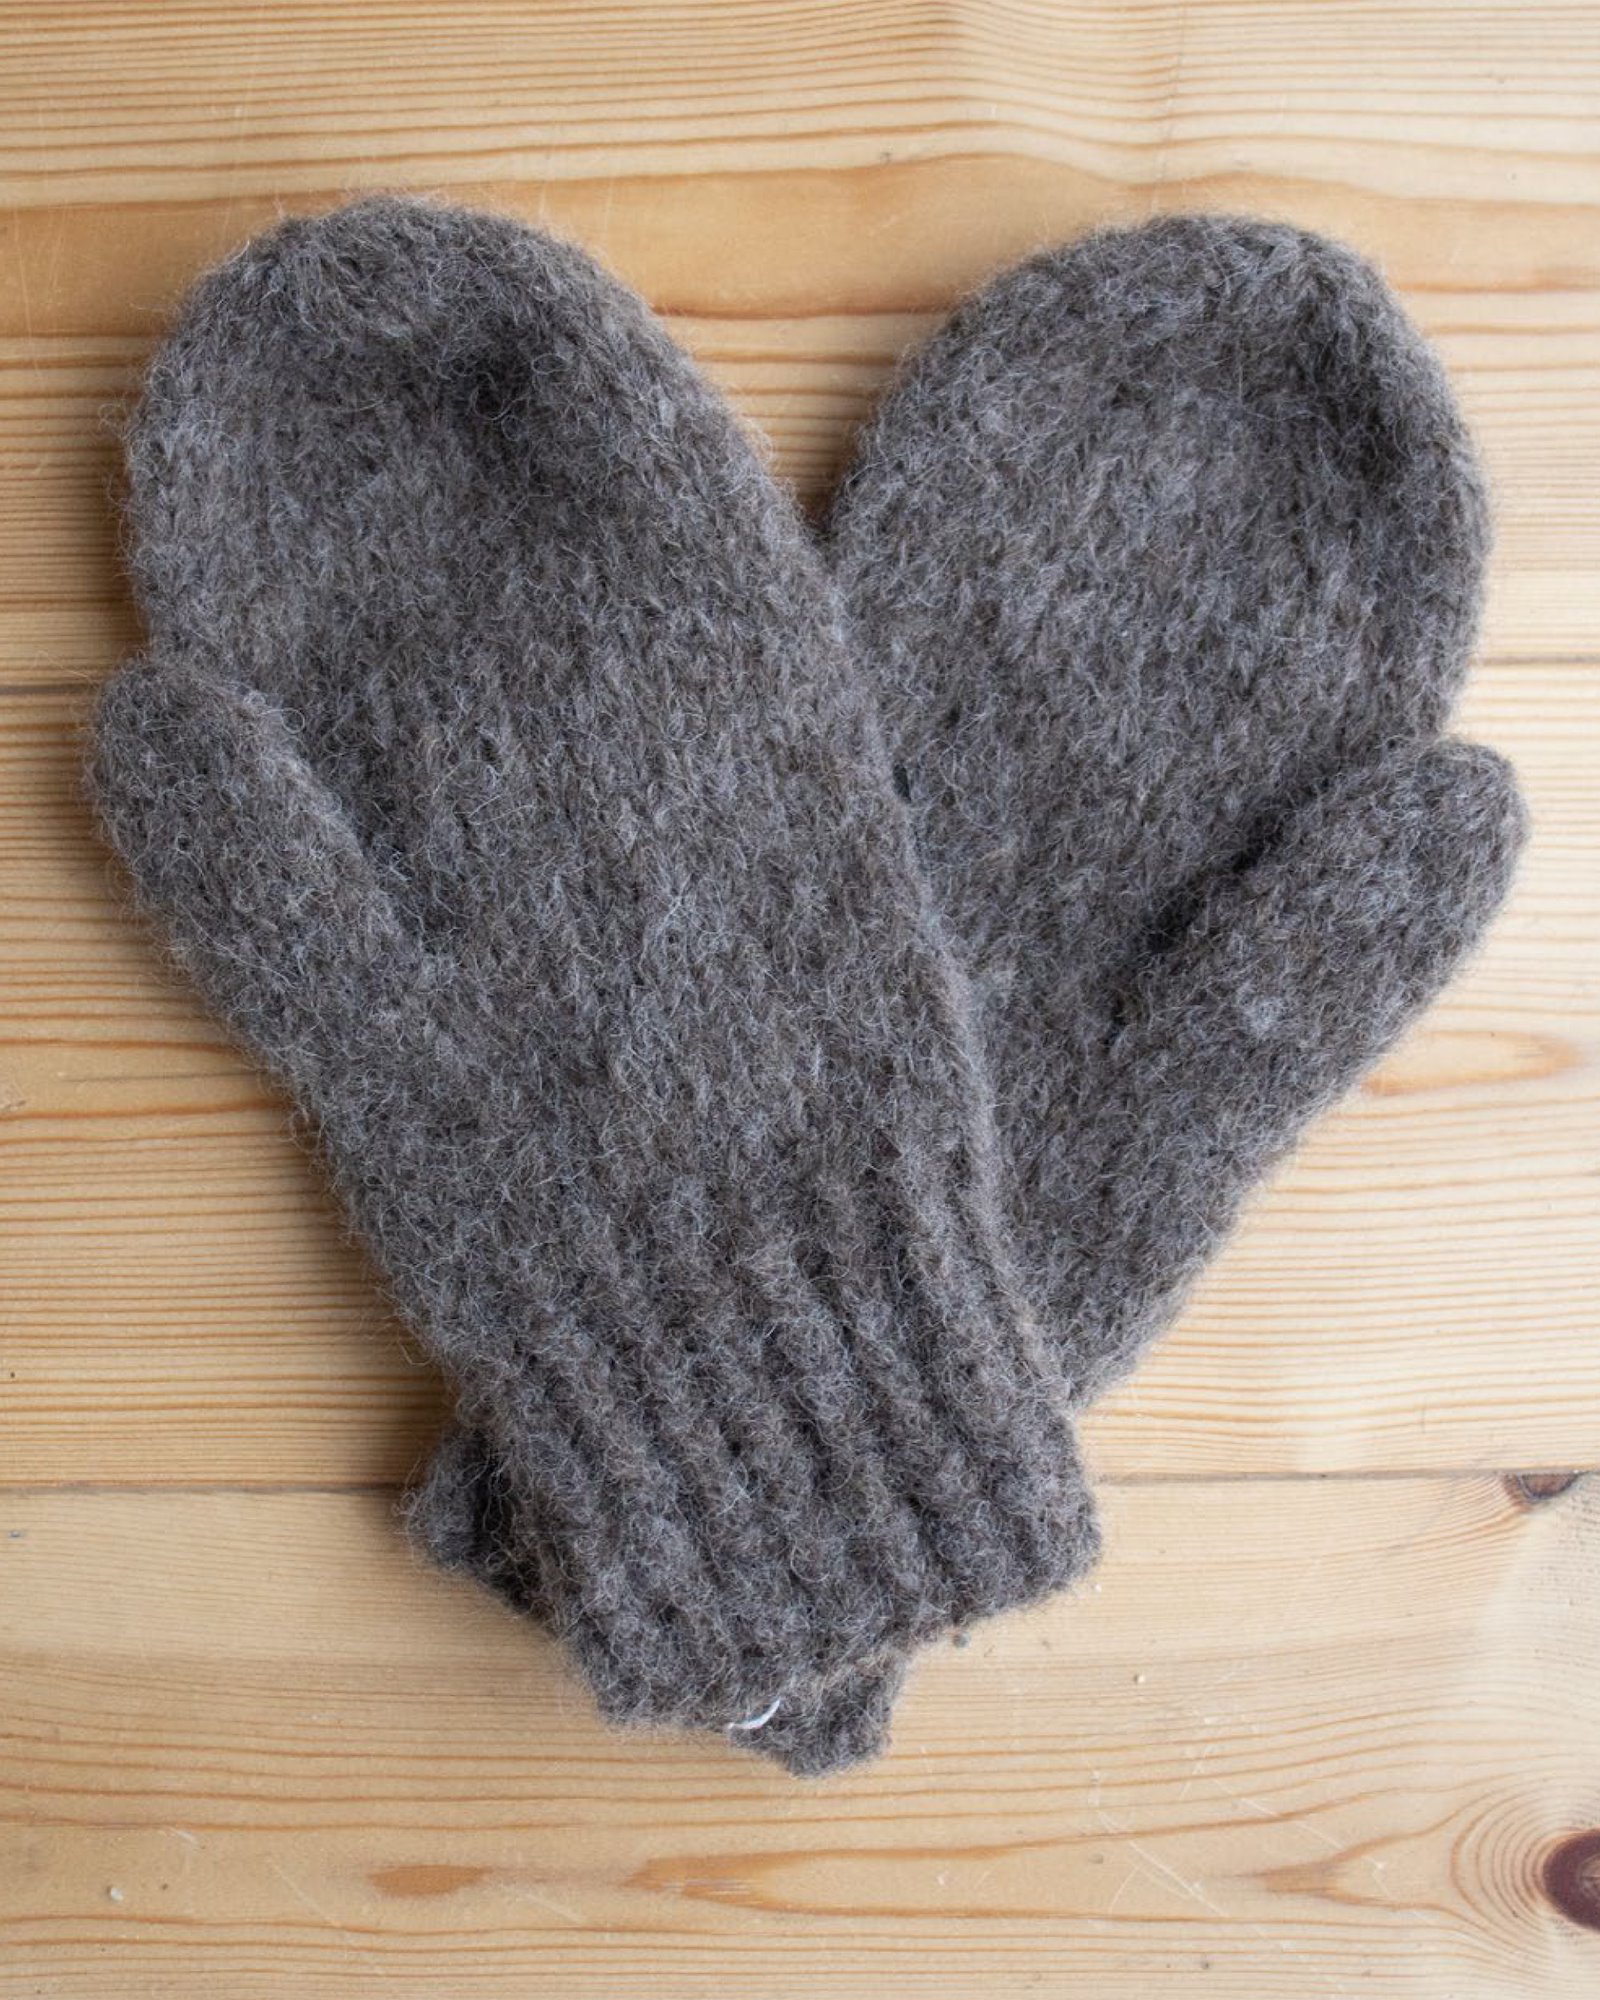 Du Store Alpakka, knitting pattern – Rime mittens DALE3018_Rim_Mittens.jpg